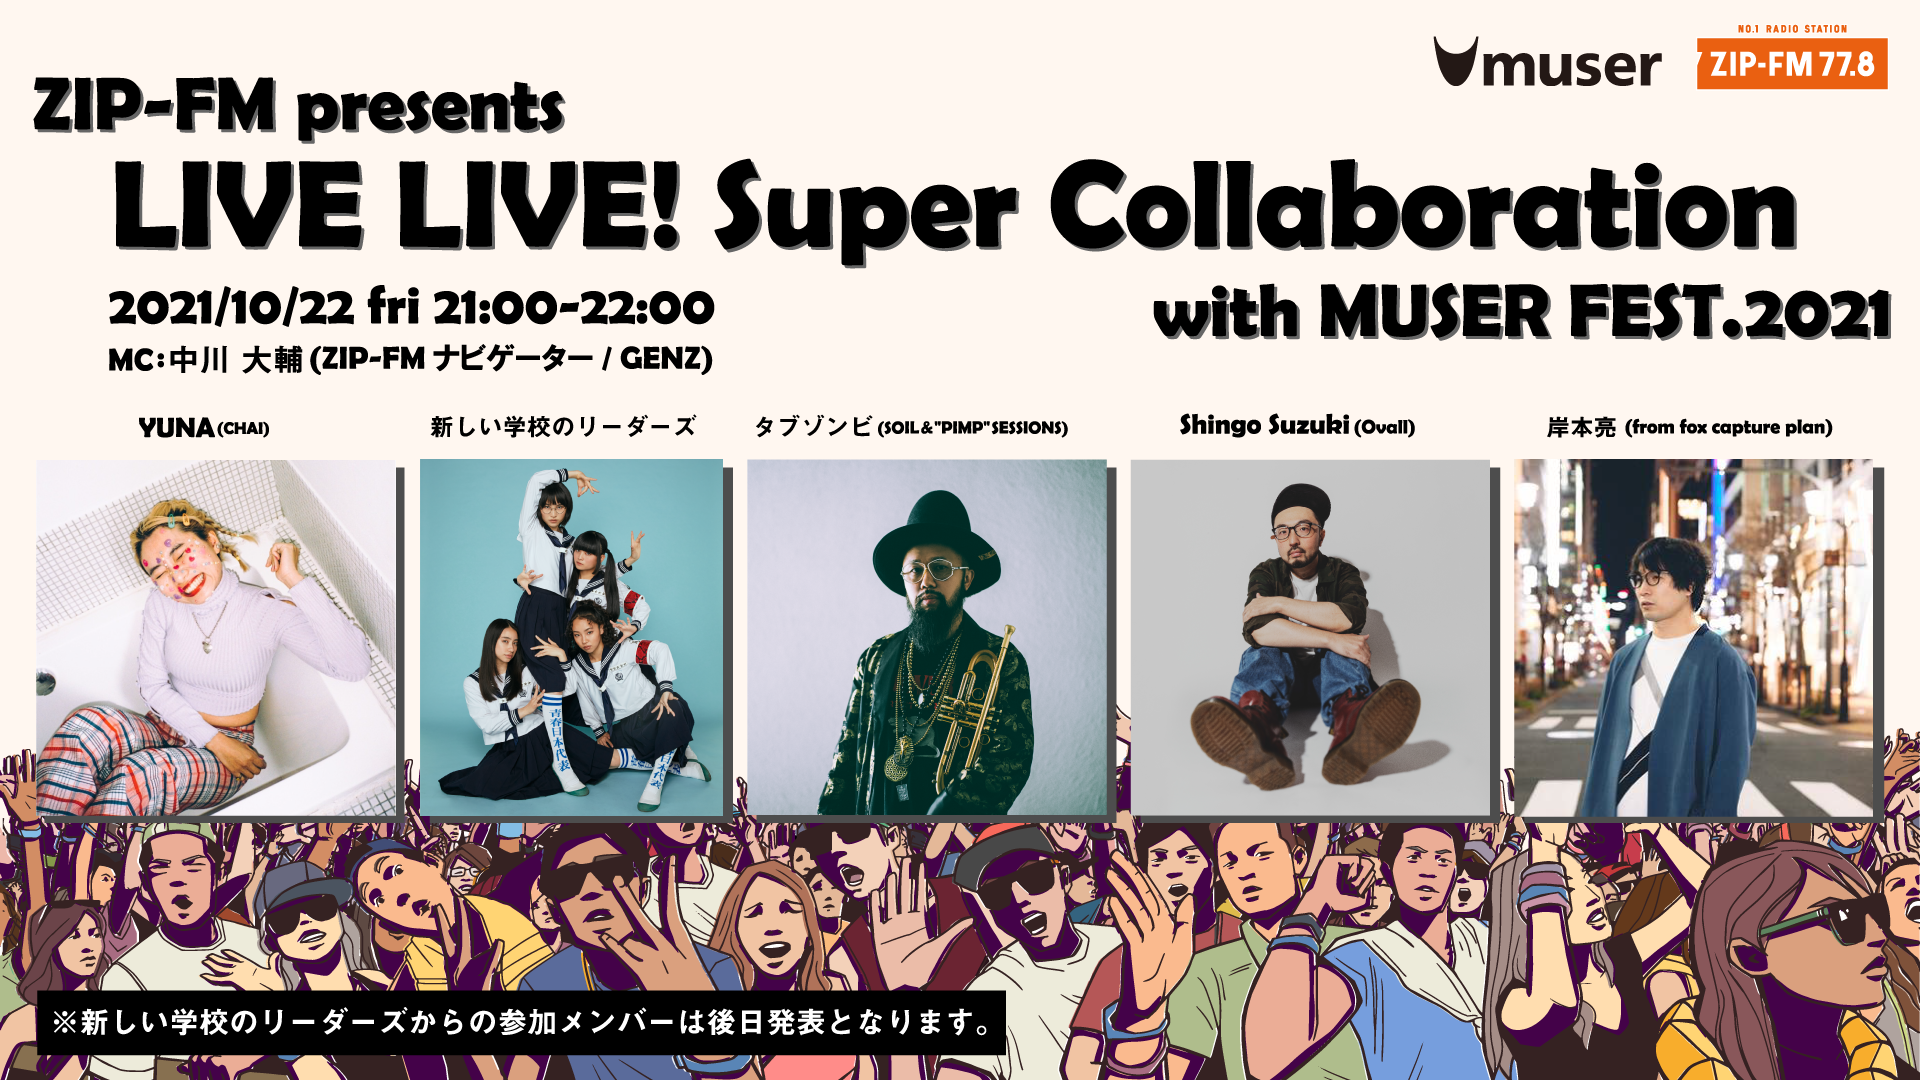 ZIP-FM presents LIVE LIVE! Super Collaboration with MUSER FEST.2021 